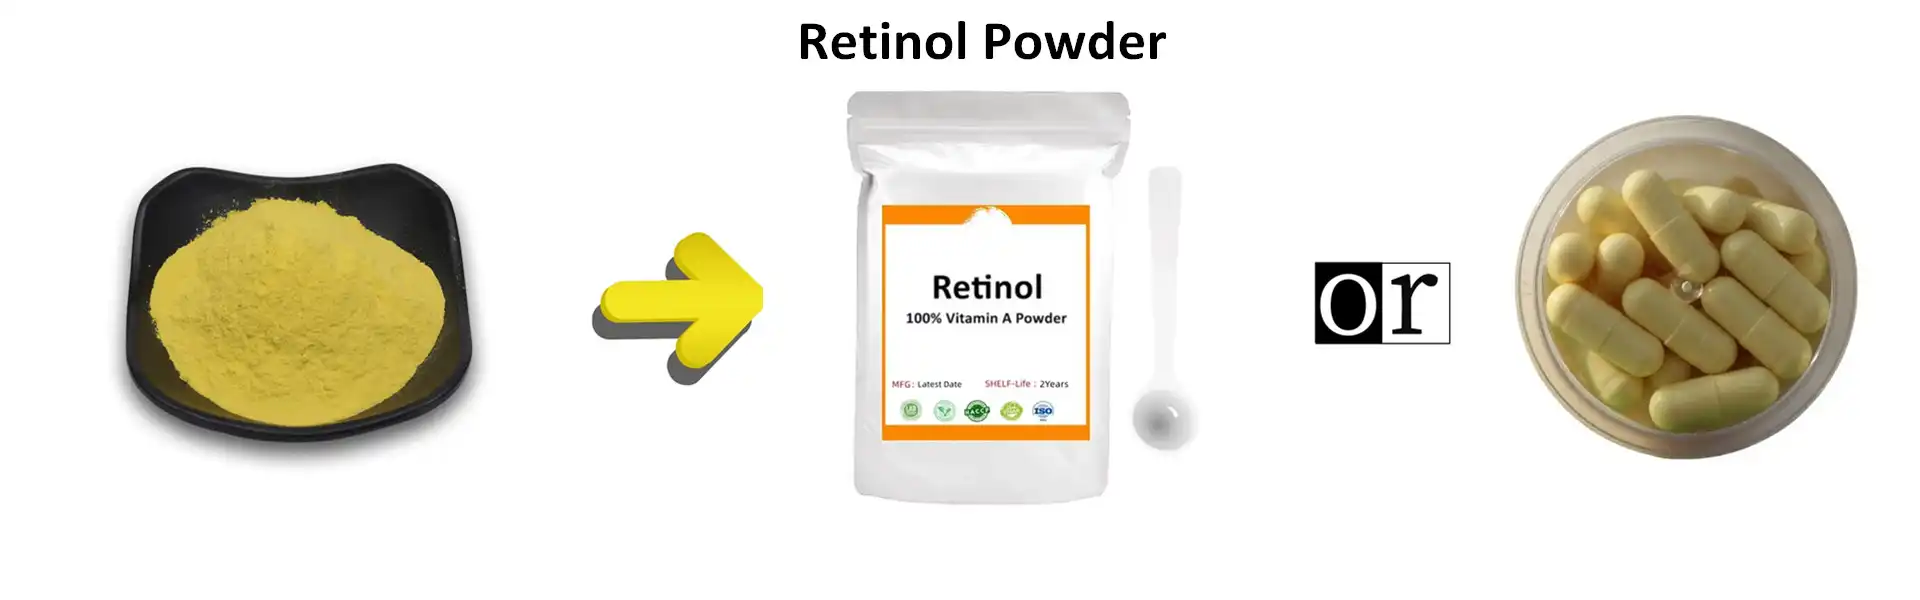 Retinol powder